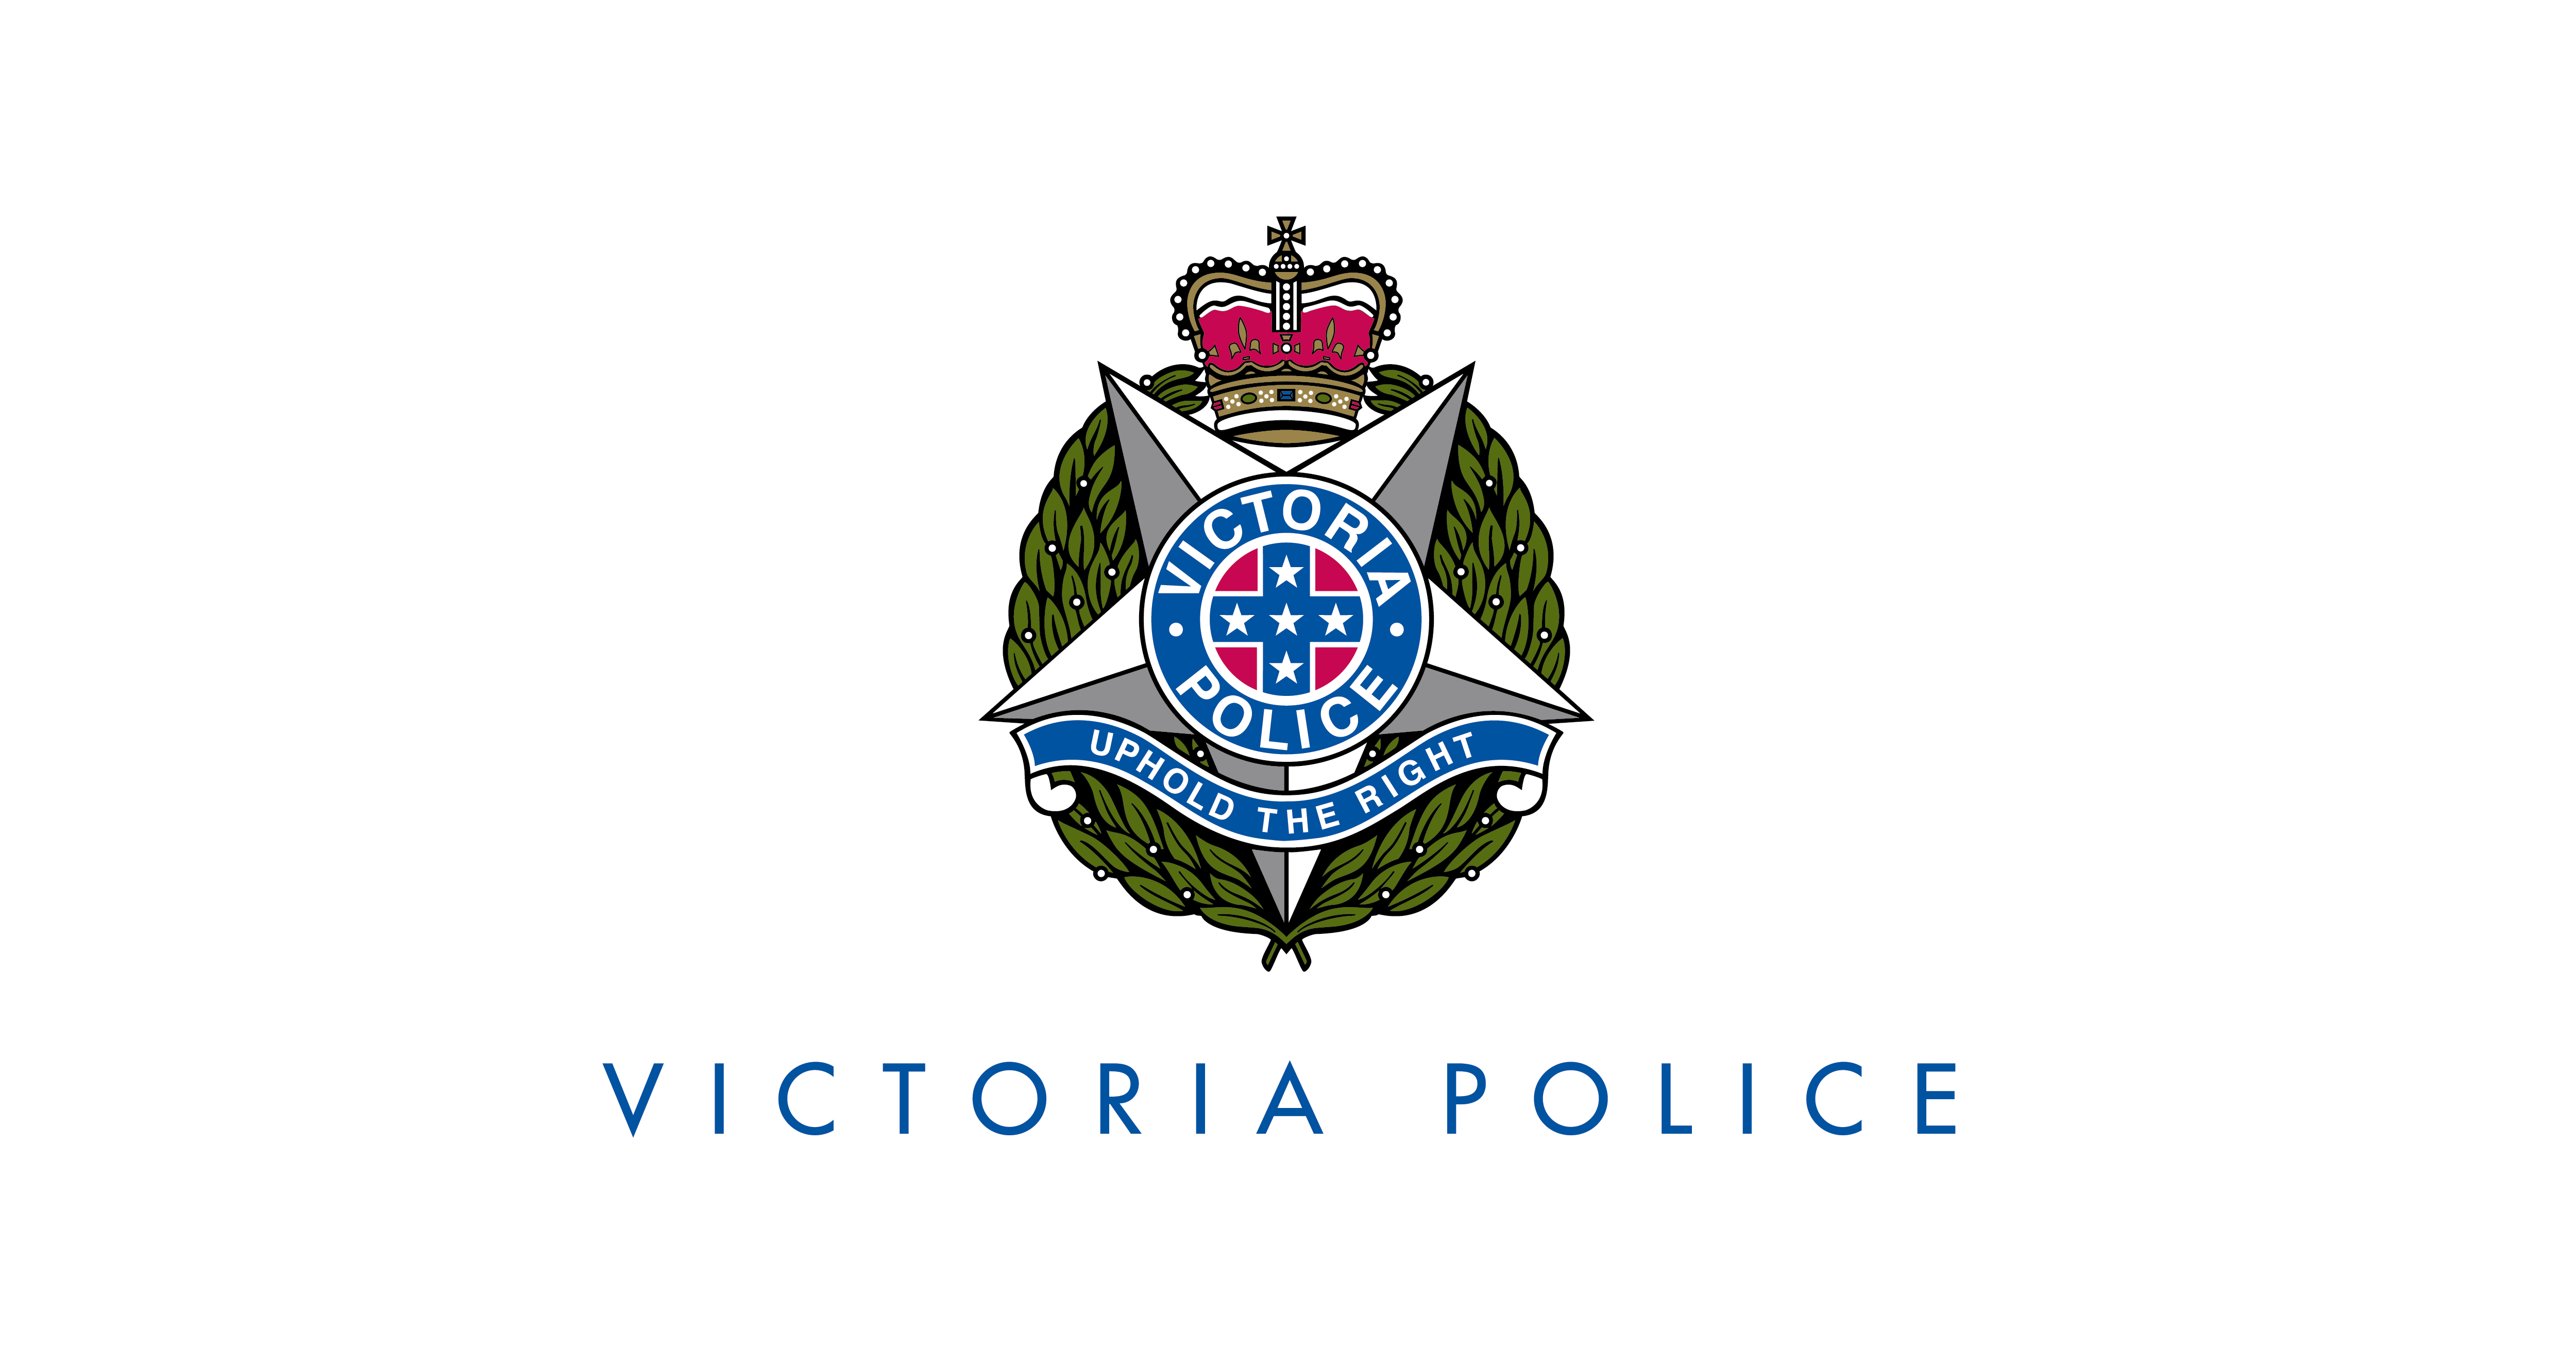 www.police.vic.gov.au